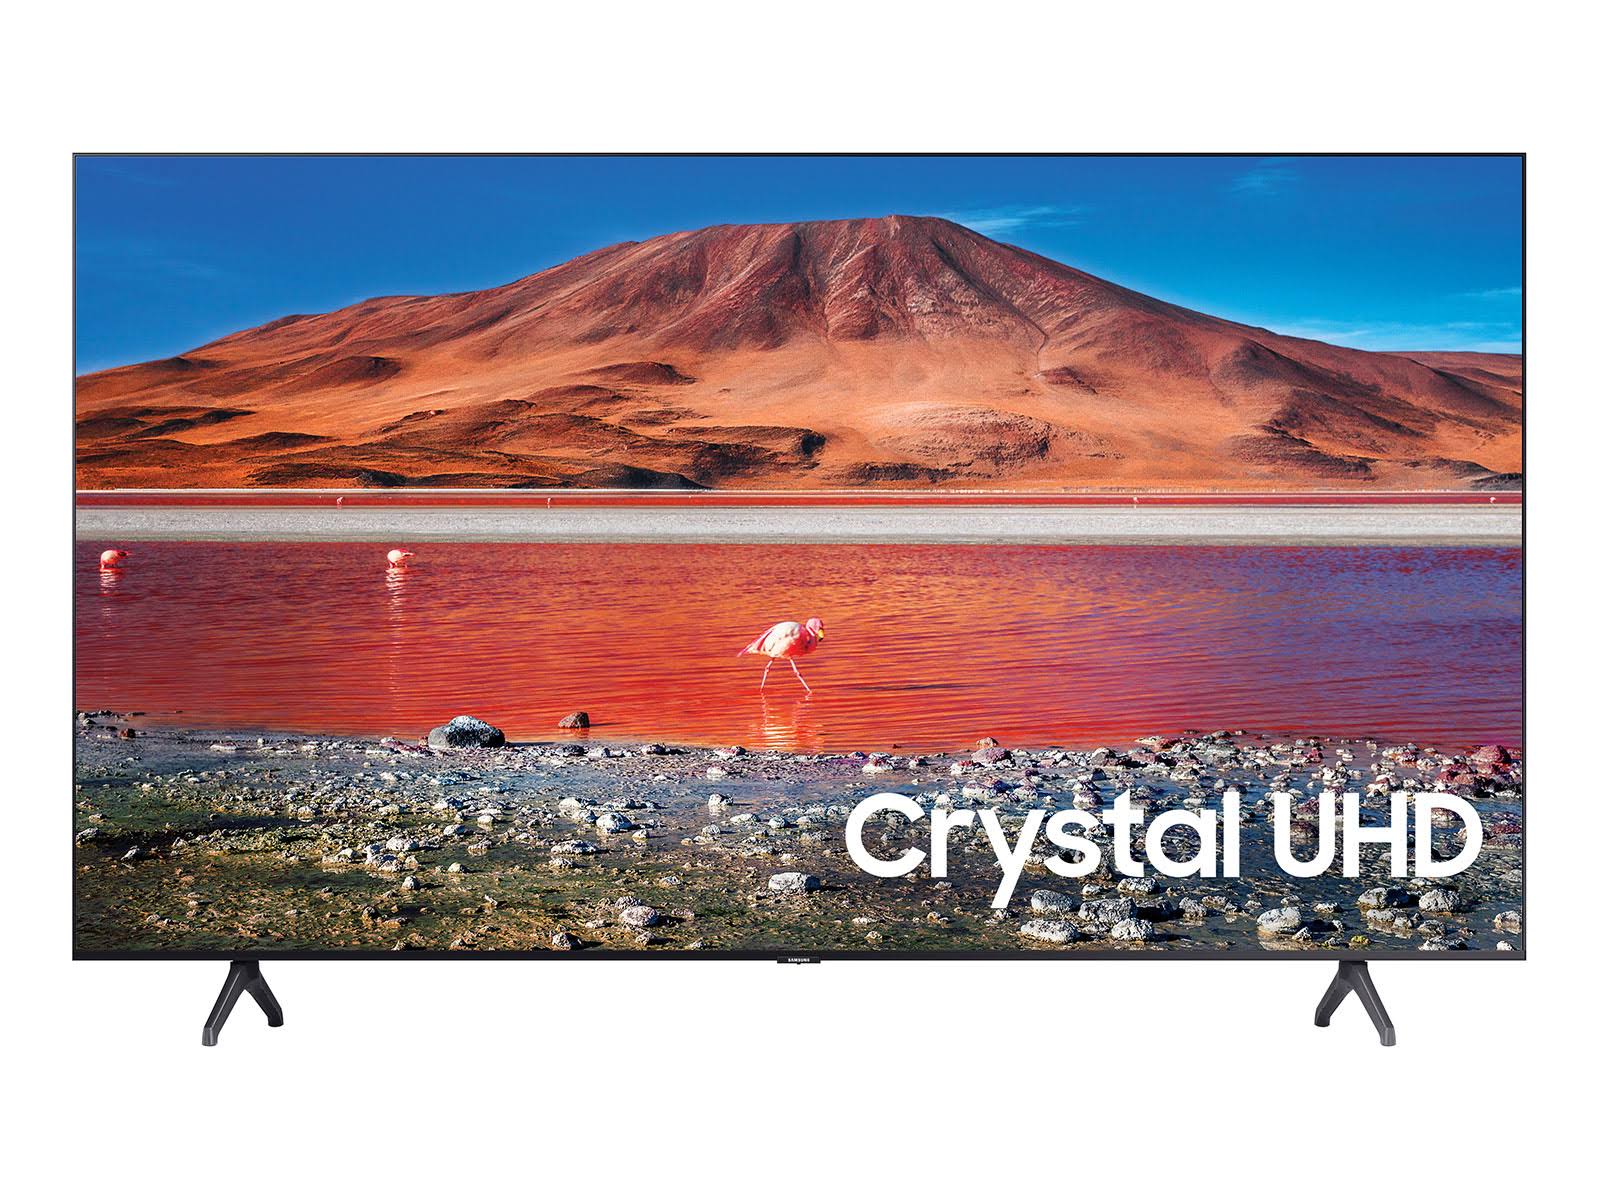 Samsung 43-inch TU-7000 Series Class Smart TV | Crystal UHD - 4K HDR - with Alexa Built-in | UN43TU7000FXZA, 2020 Model